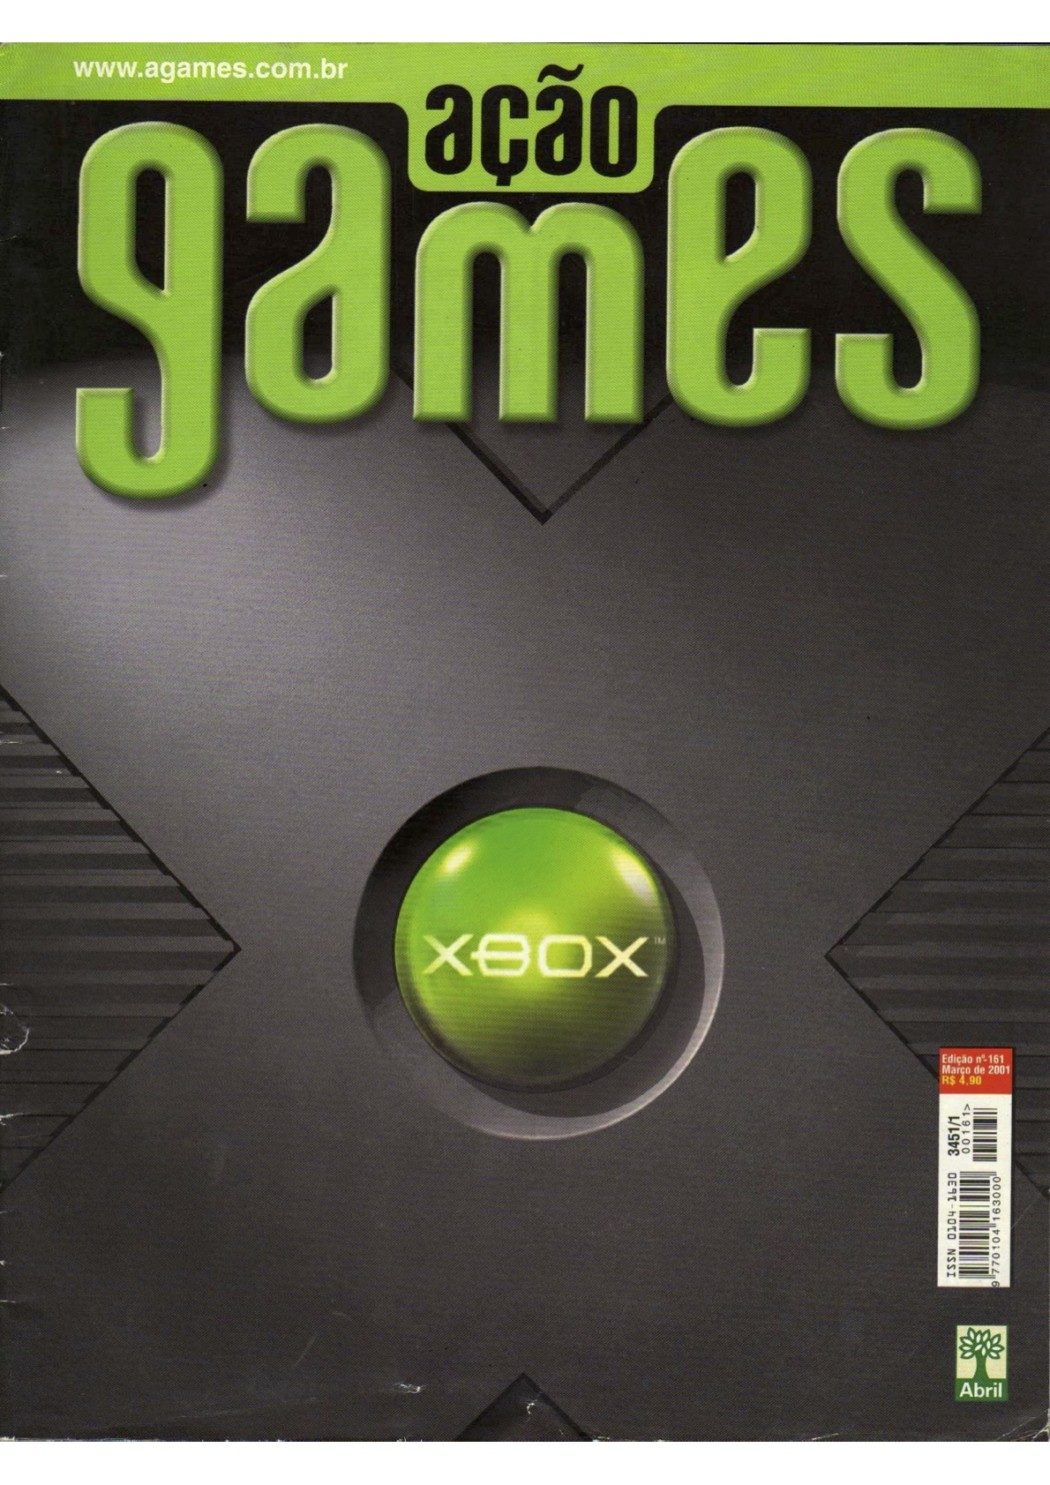 RetroArkade: Como as revistas de games noticiaram o primeiro Xbox